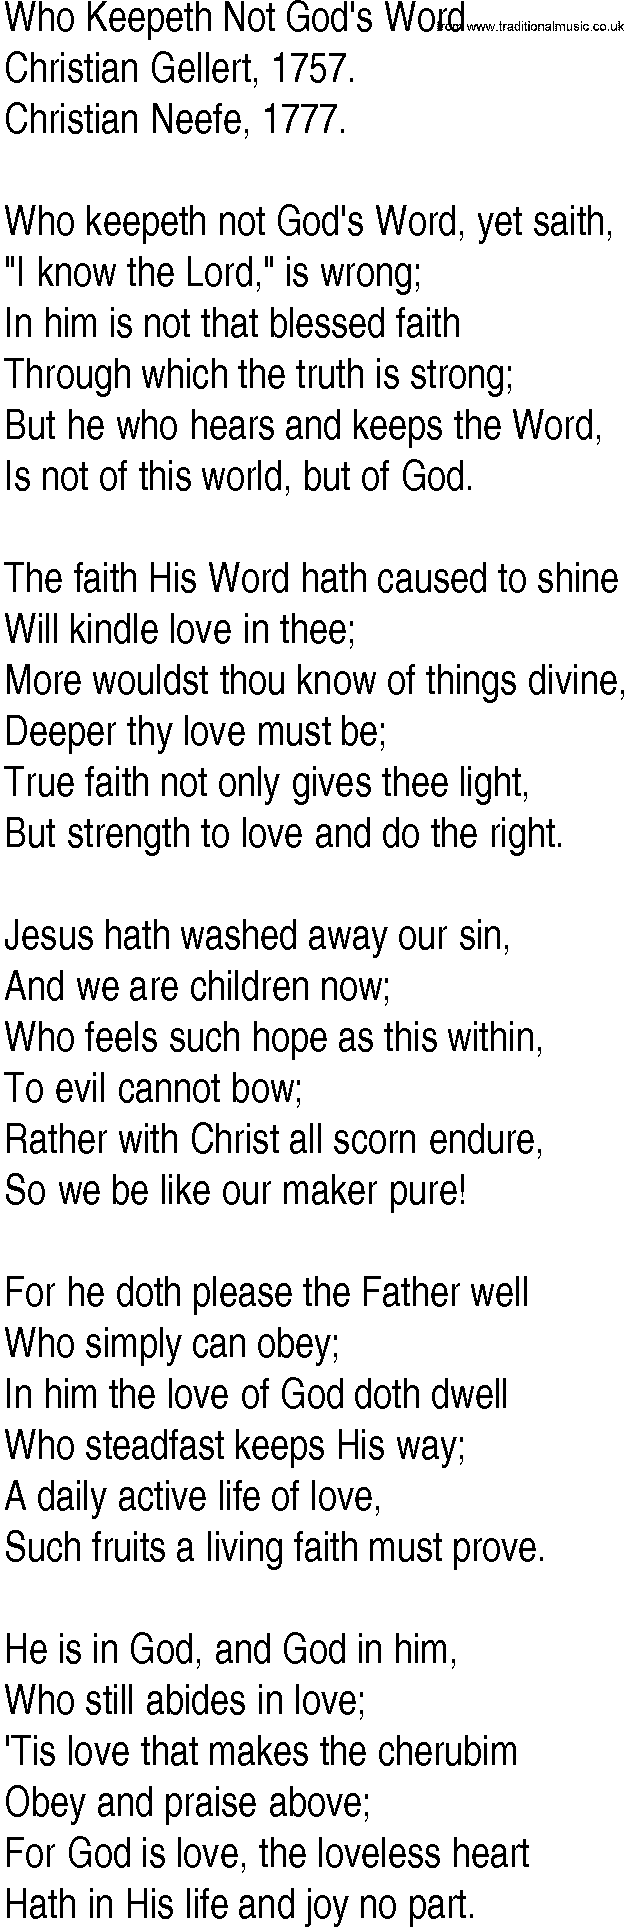 Hymn and Gospel Song: Who Keepeth Not God's Word by Christian Gellert lyrics